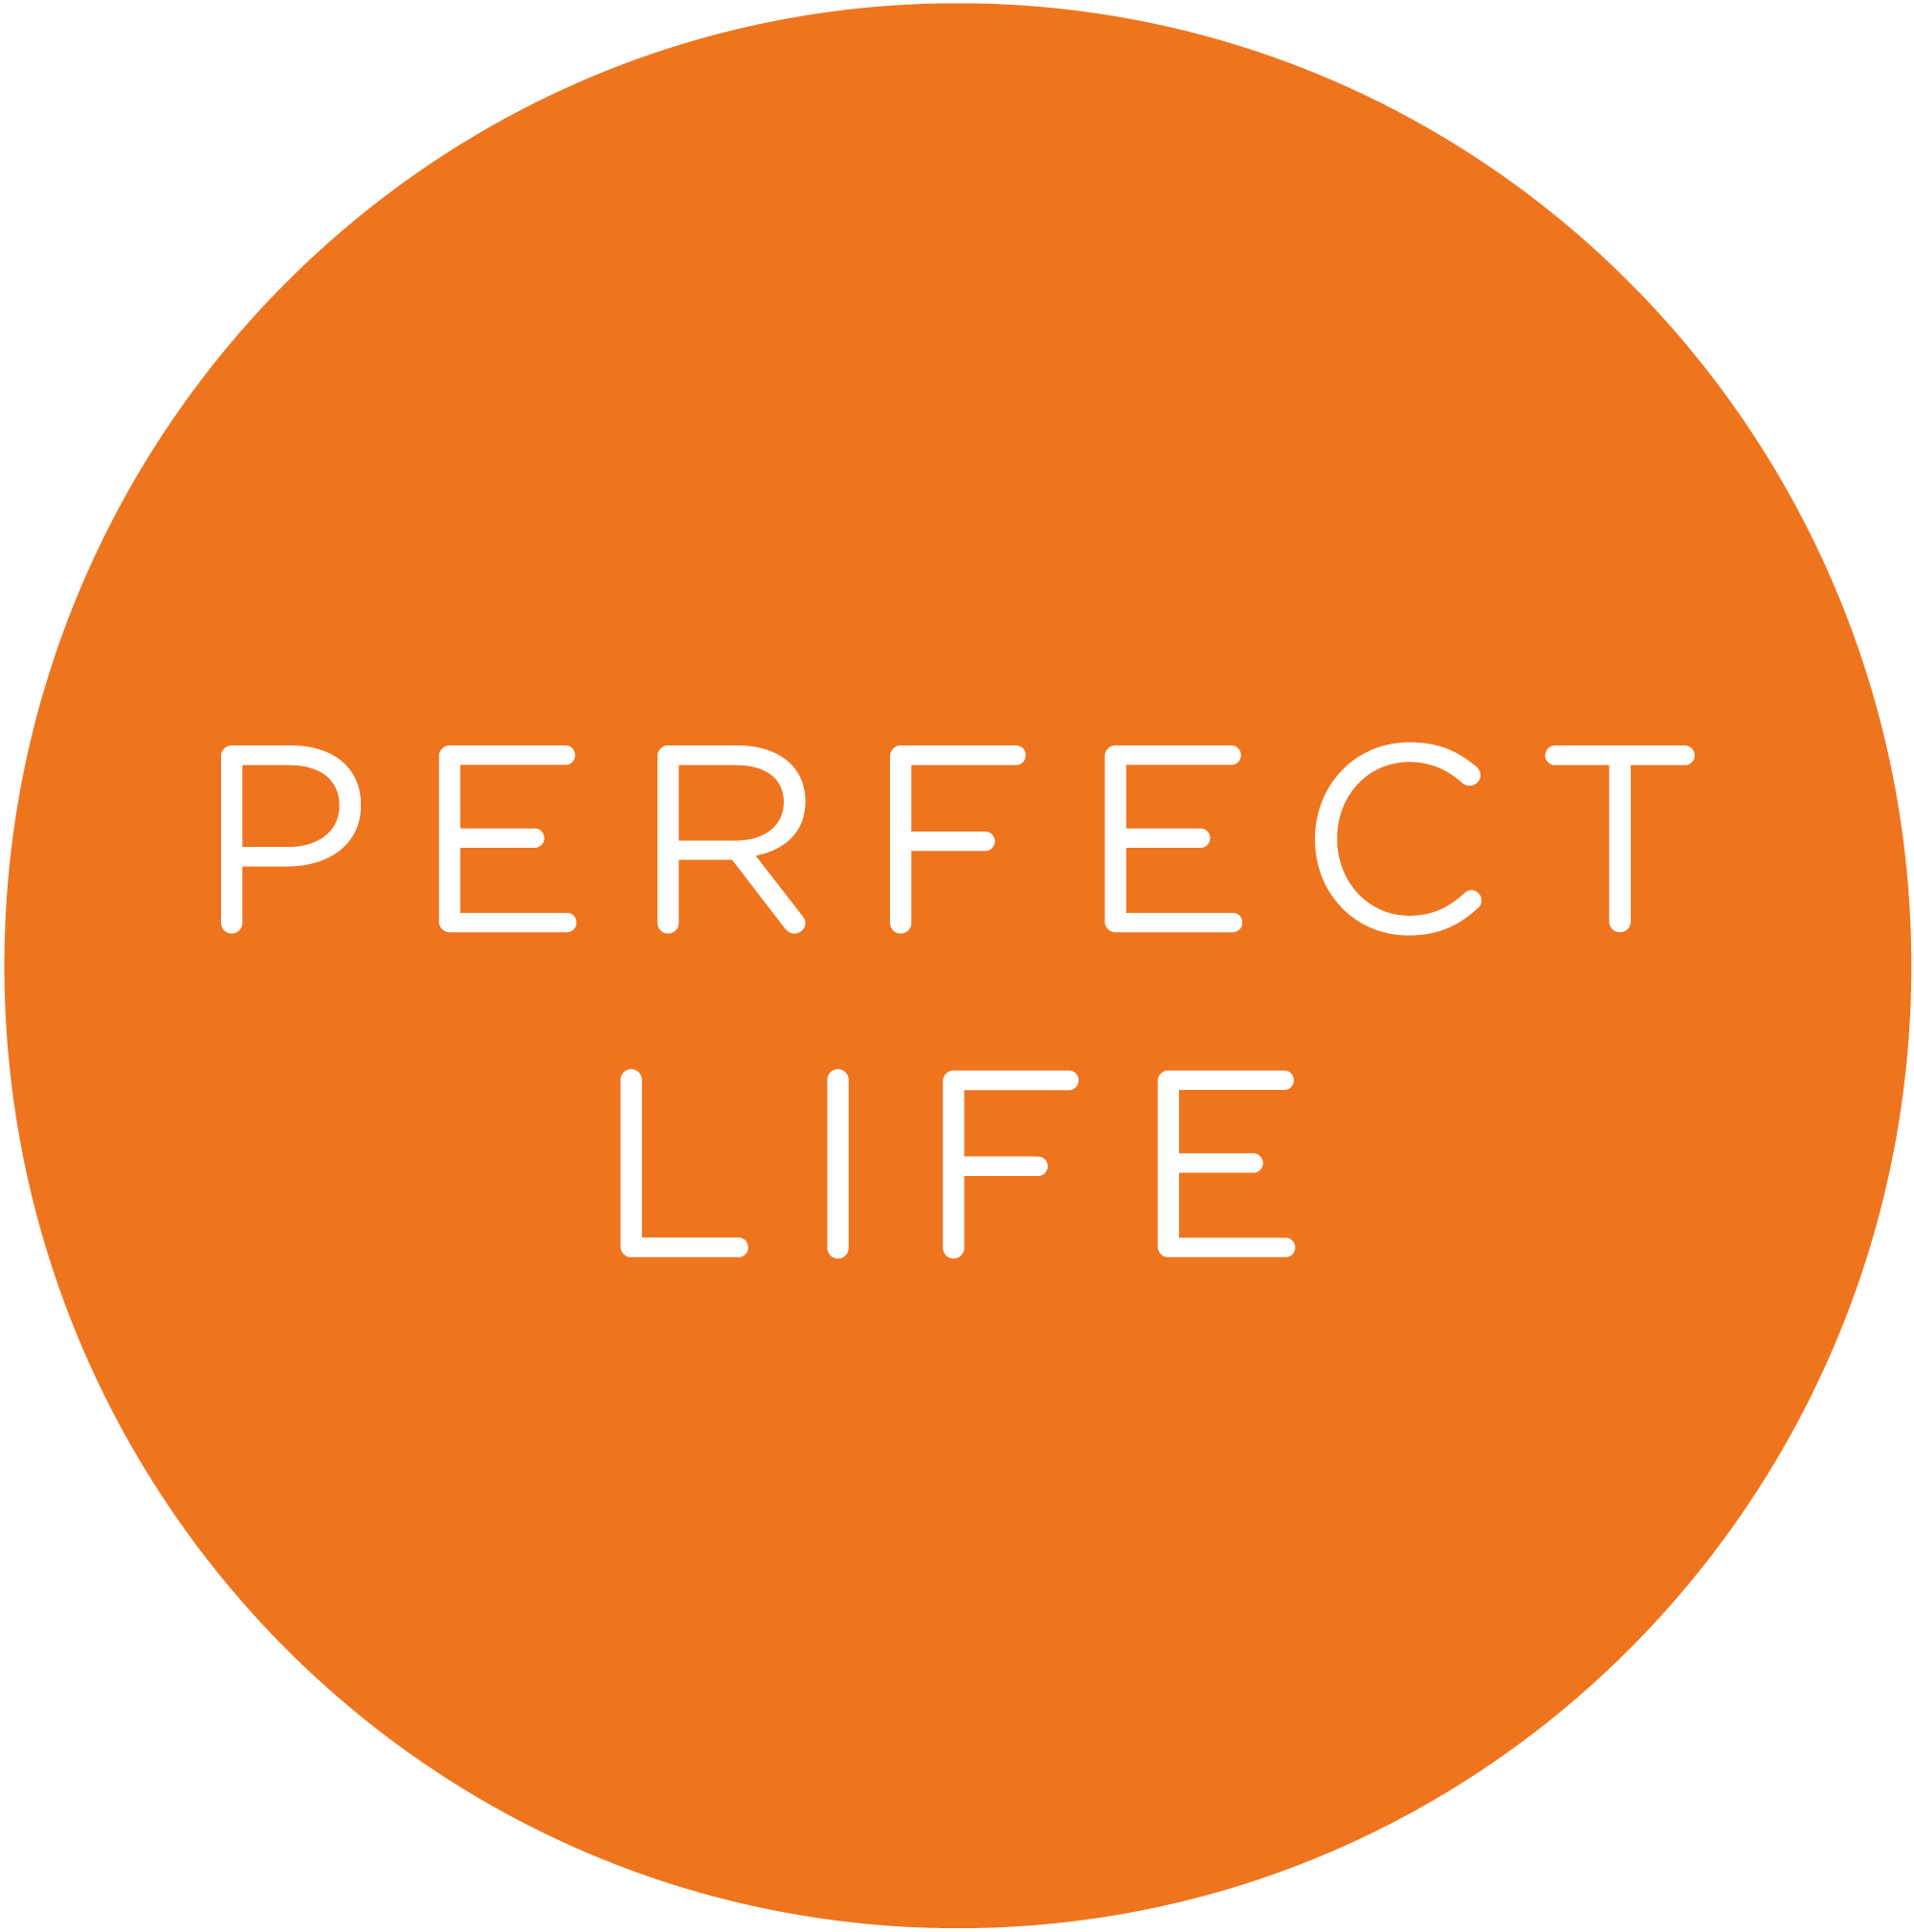 Simple perfect life. Perfect Life. Perfect Life канал. Perfect Life видео. Перфект лайф песни.